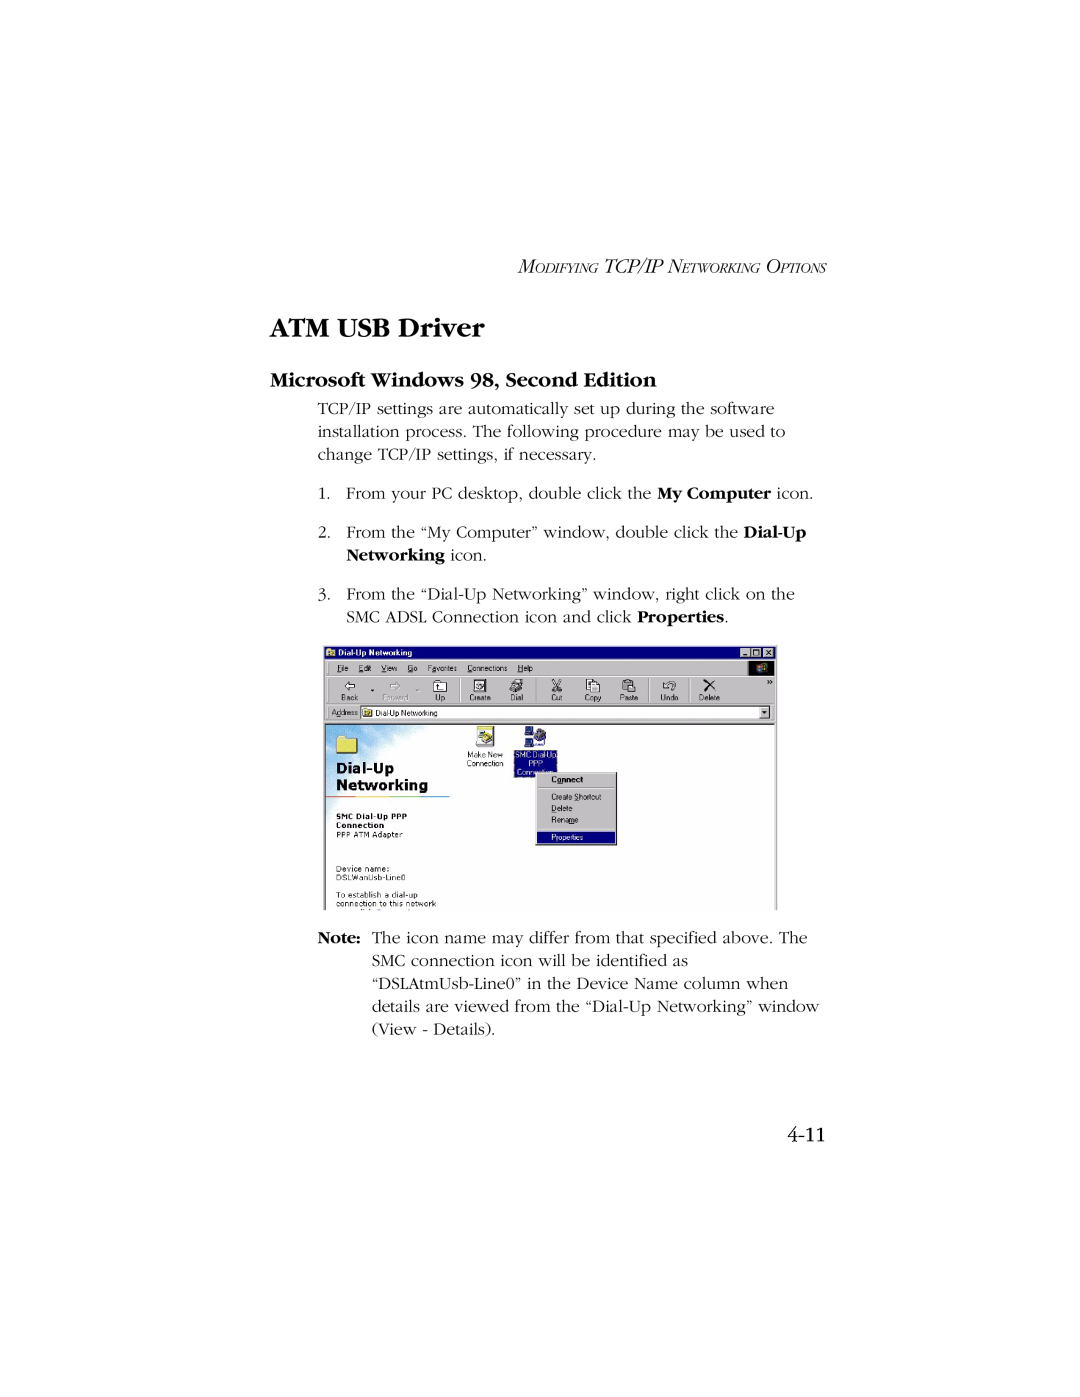 SMC Networks SMC7003-USB manual ATM USB Driver, 4-11, Microsoft Windows 98, Second Edition 